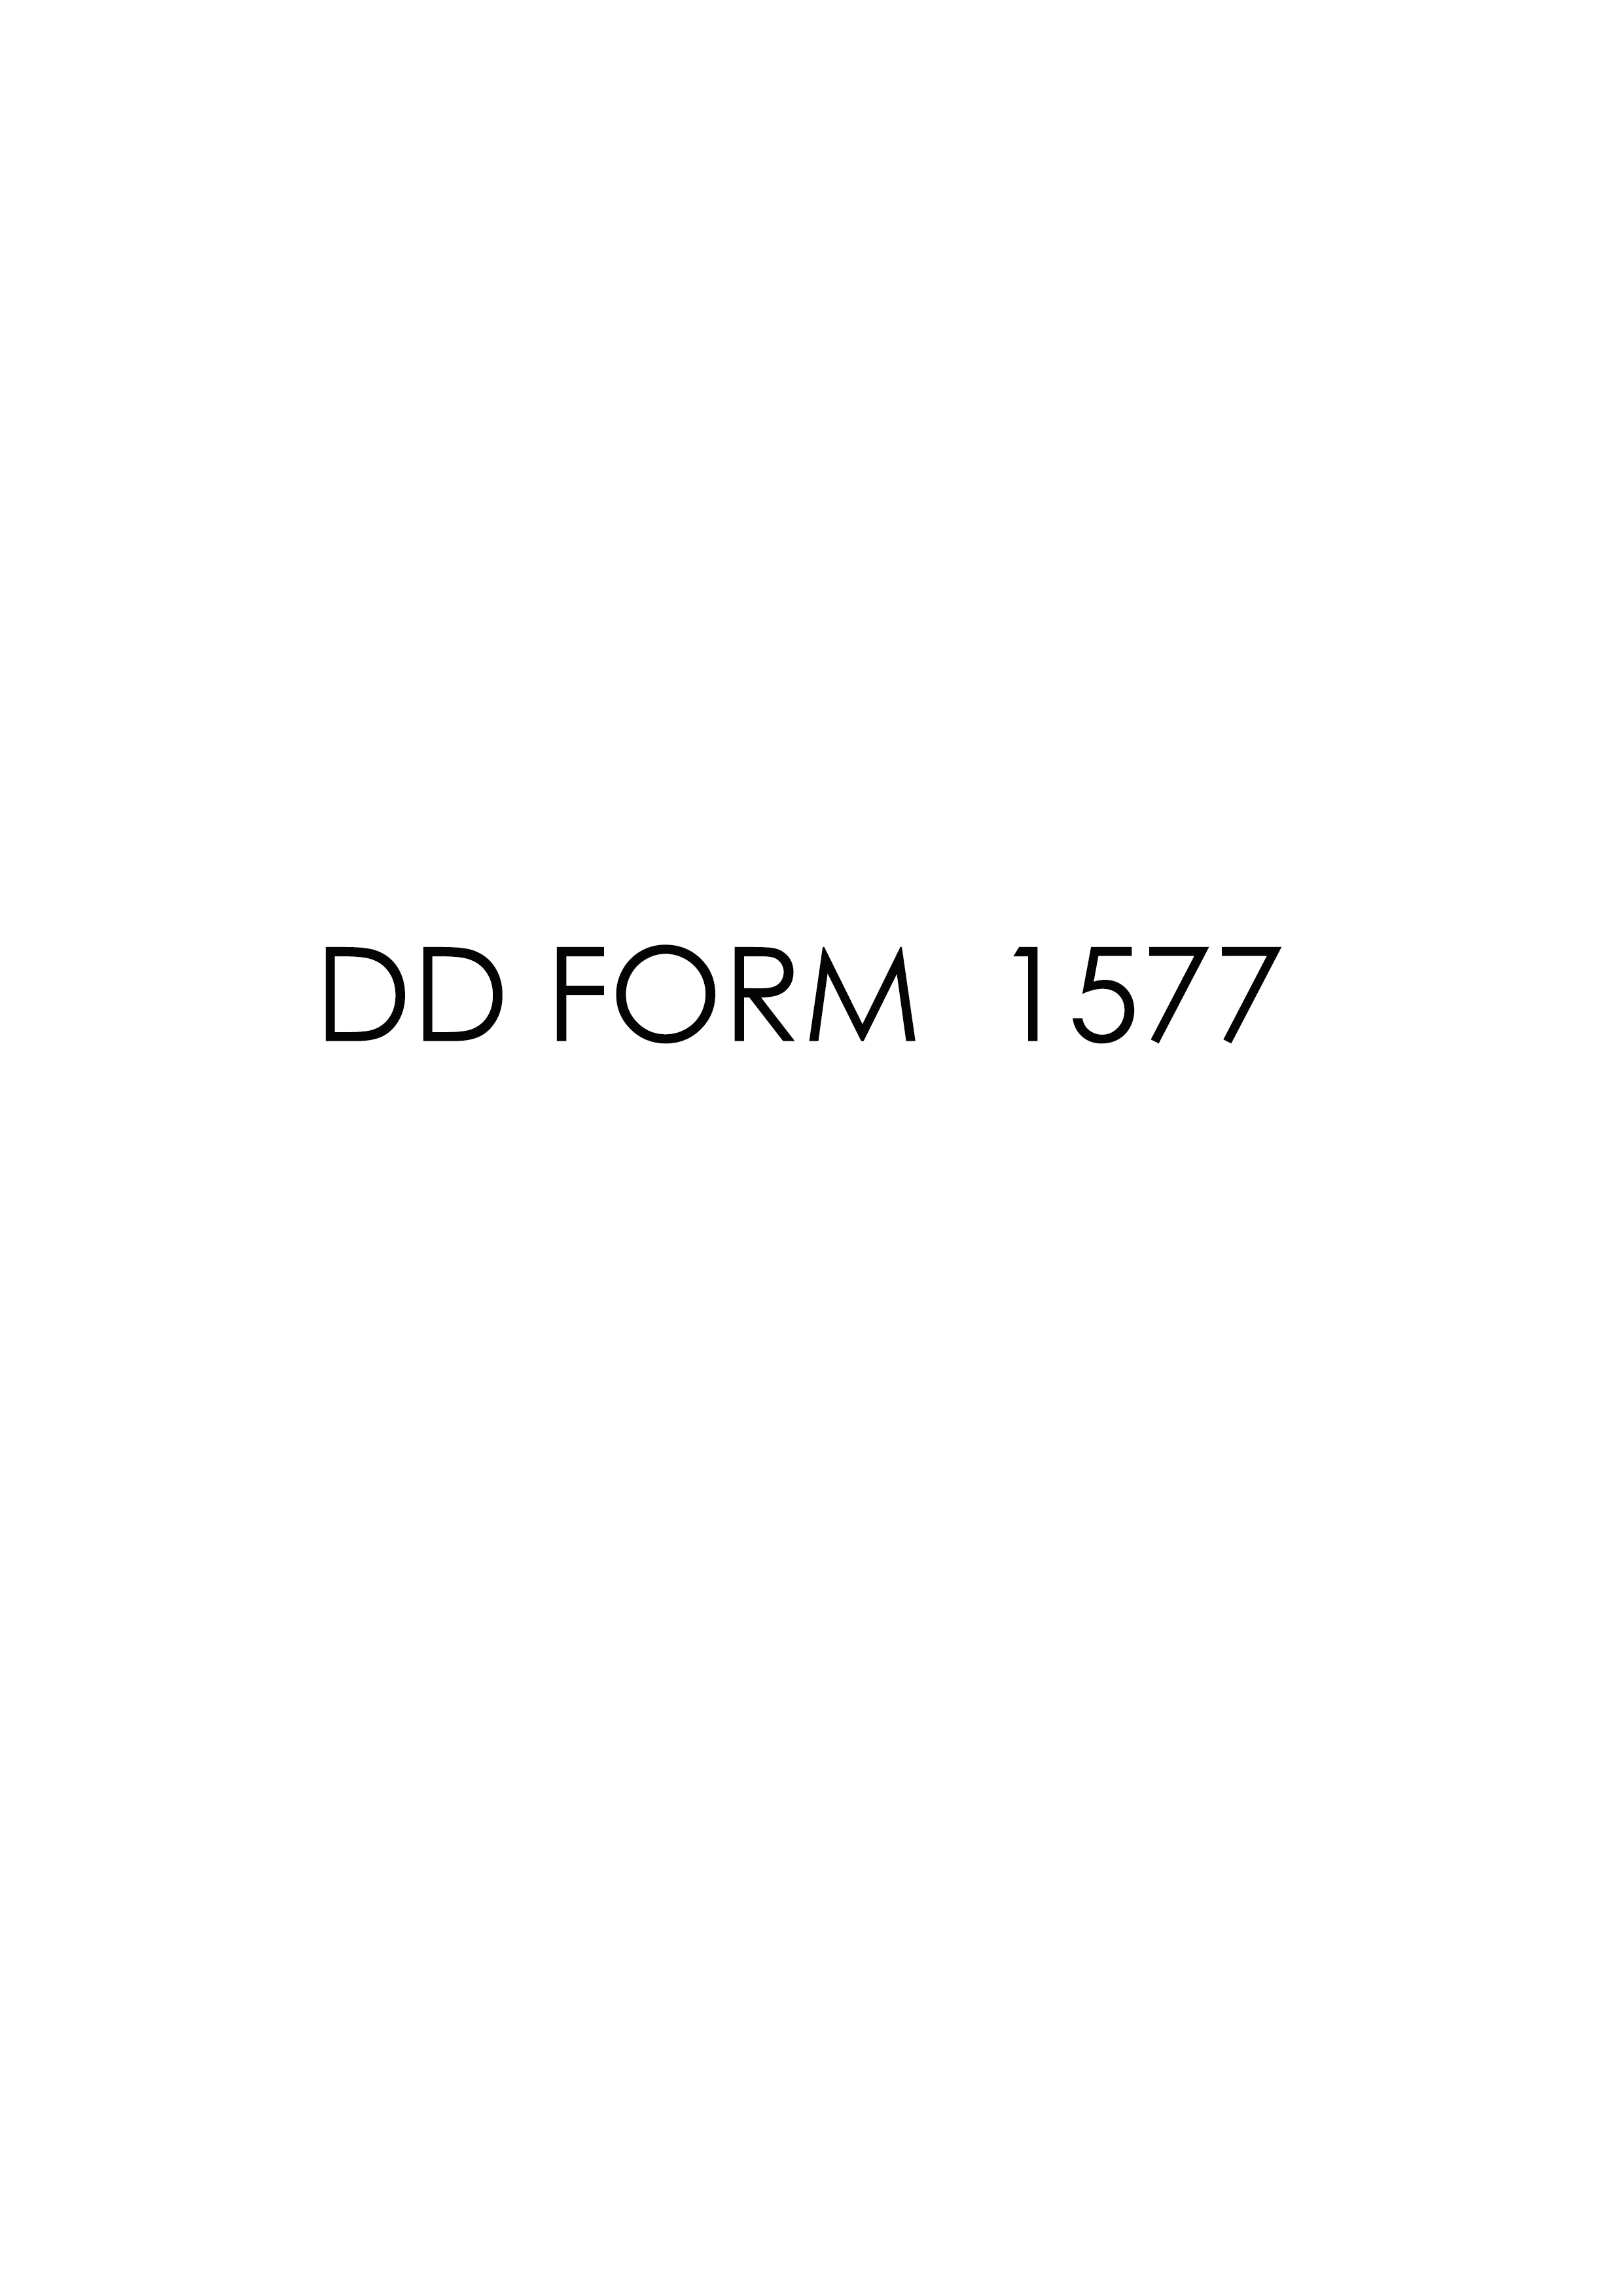 Download dd 1577 Form